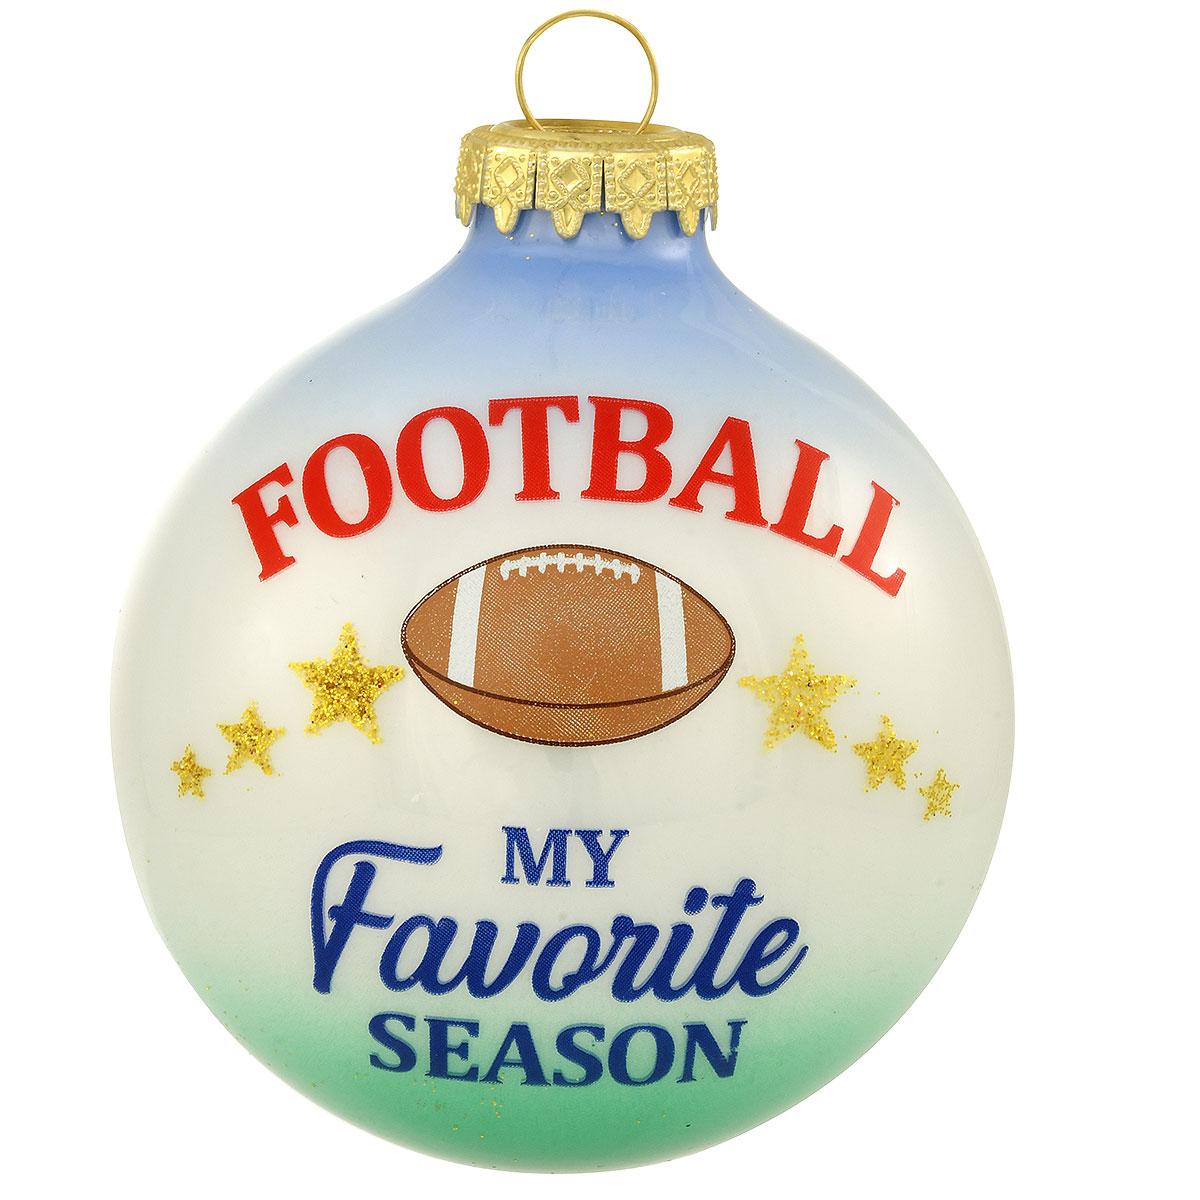 Football Favorite Season Ornament